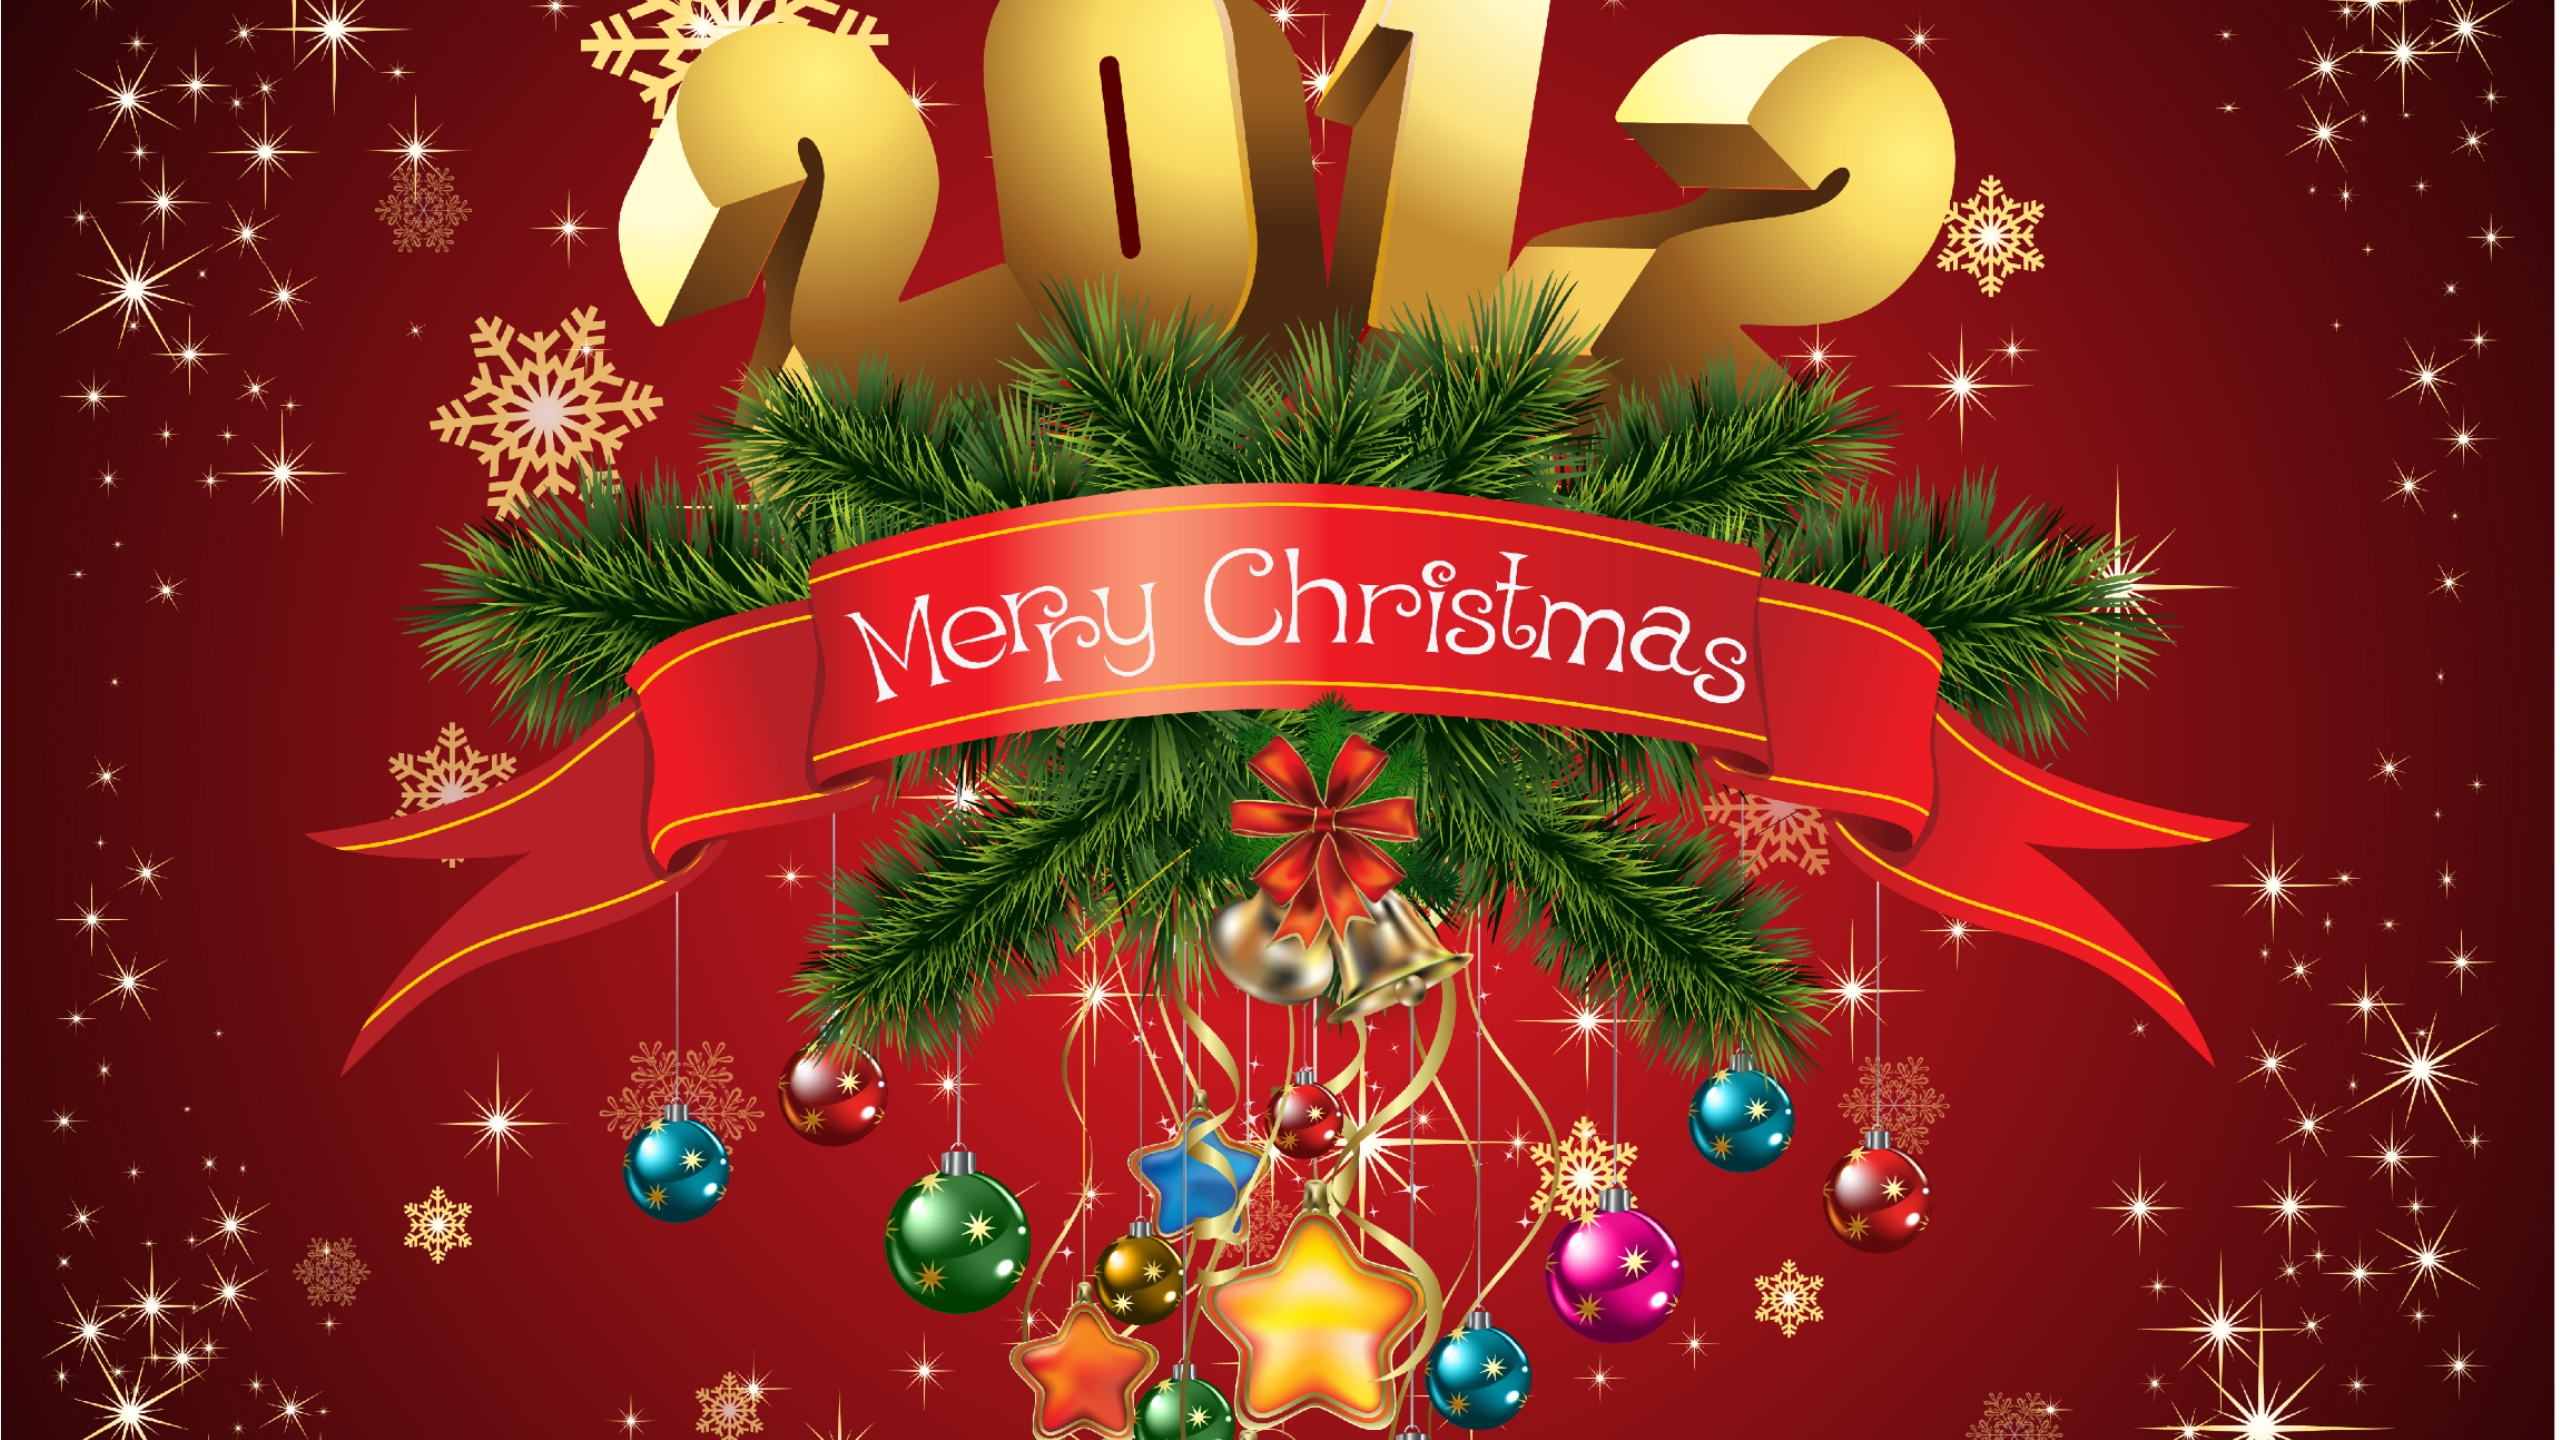 Merry Christmas 2012 for 2560x1440 HDTV resolution